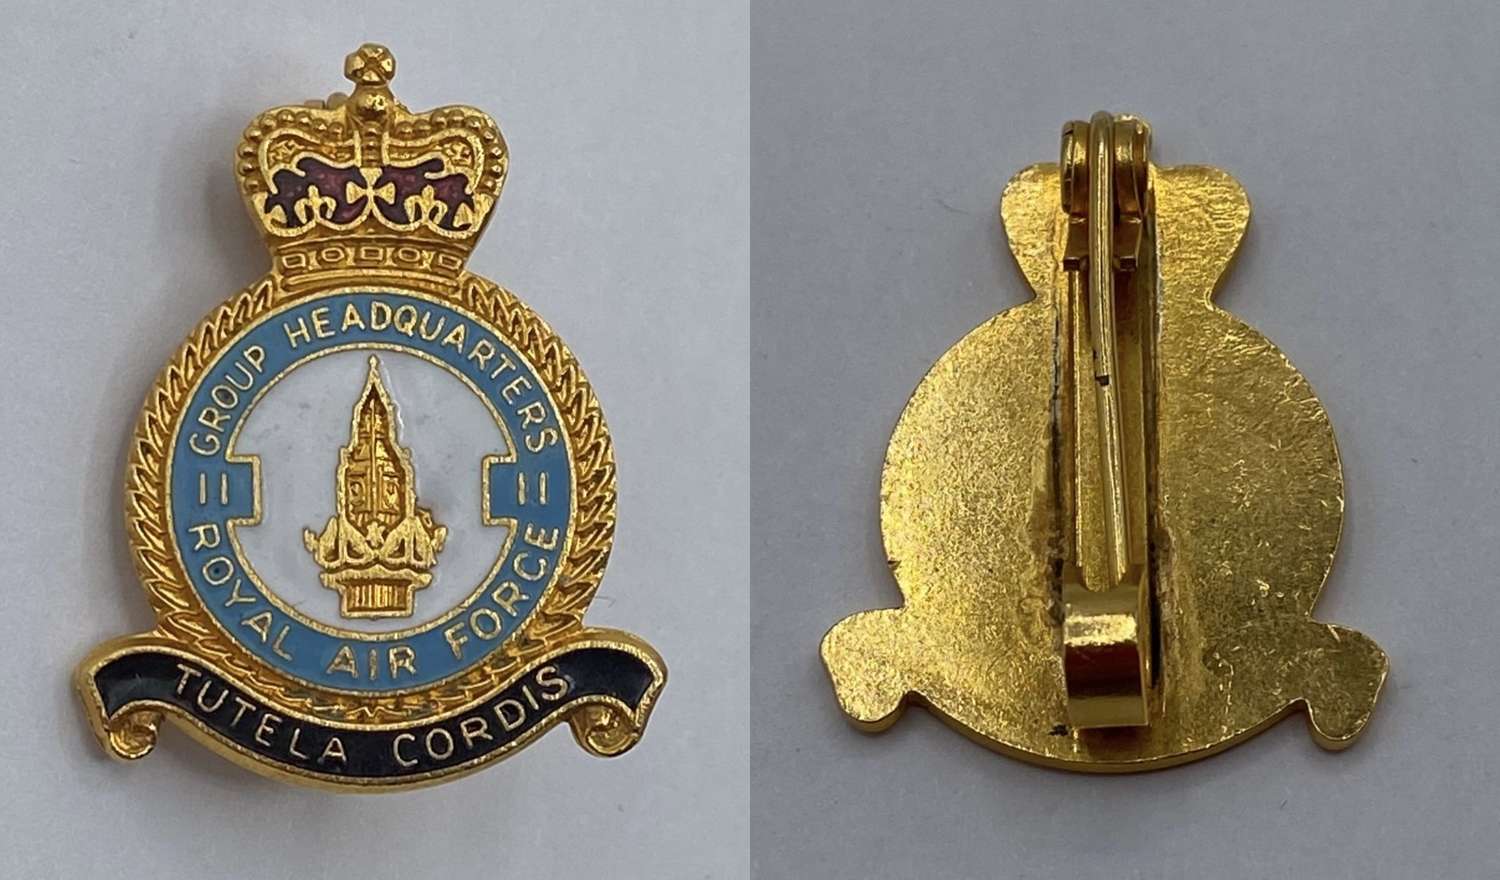 Post WW2 Royal Air Force 11 Group Headquarters Tutela Cordis Badge